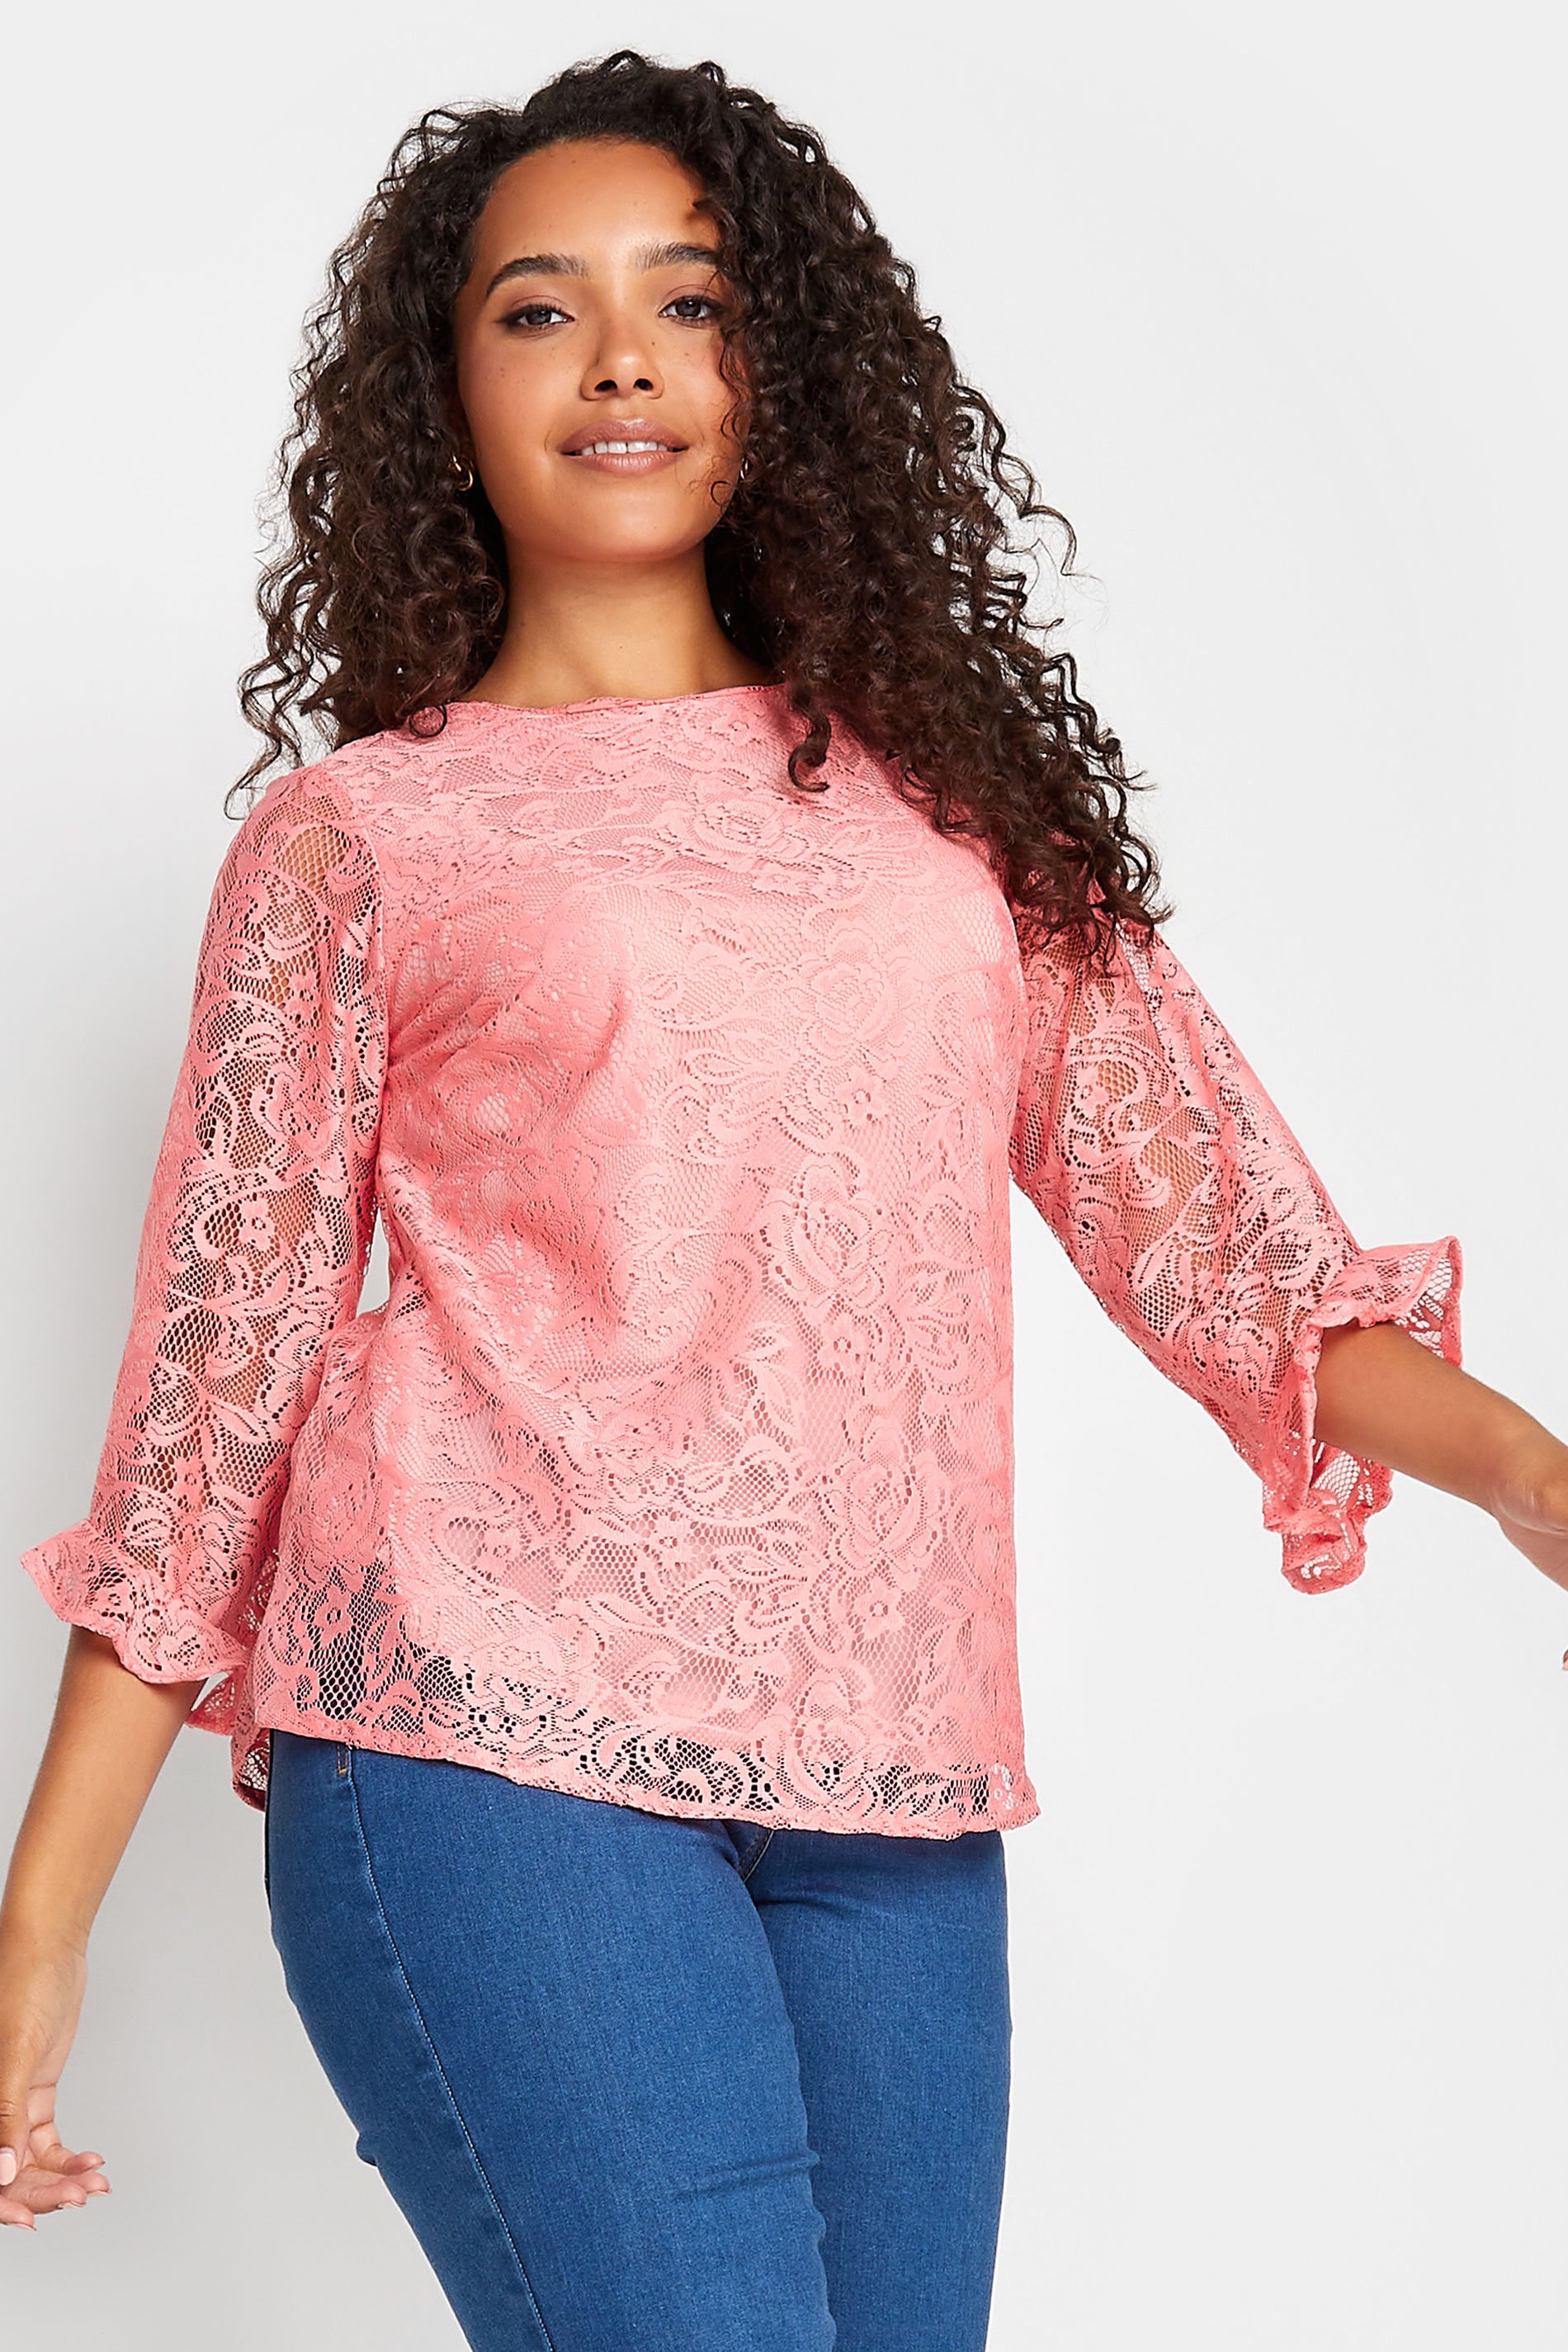 M&Co Light Pink Floral Lace Long Sleeve Blouse | M&Co 1